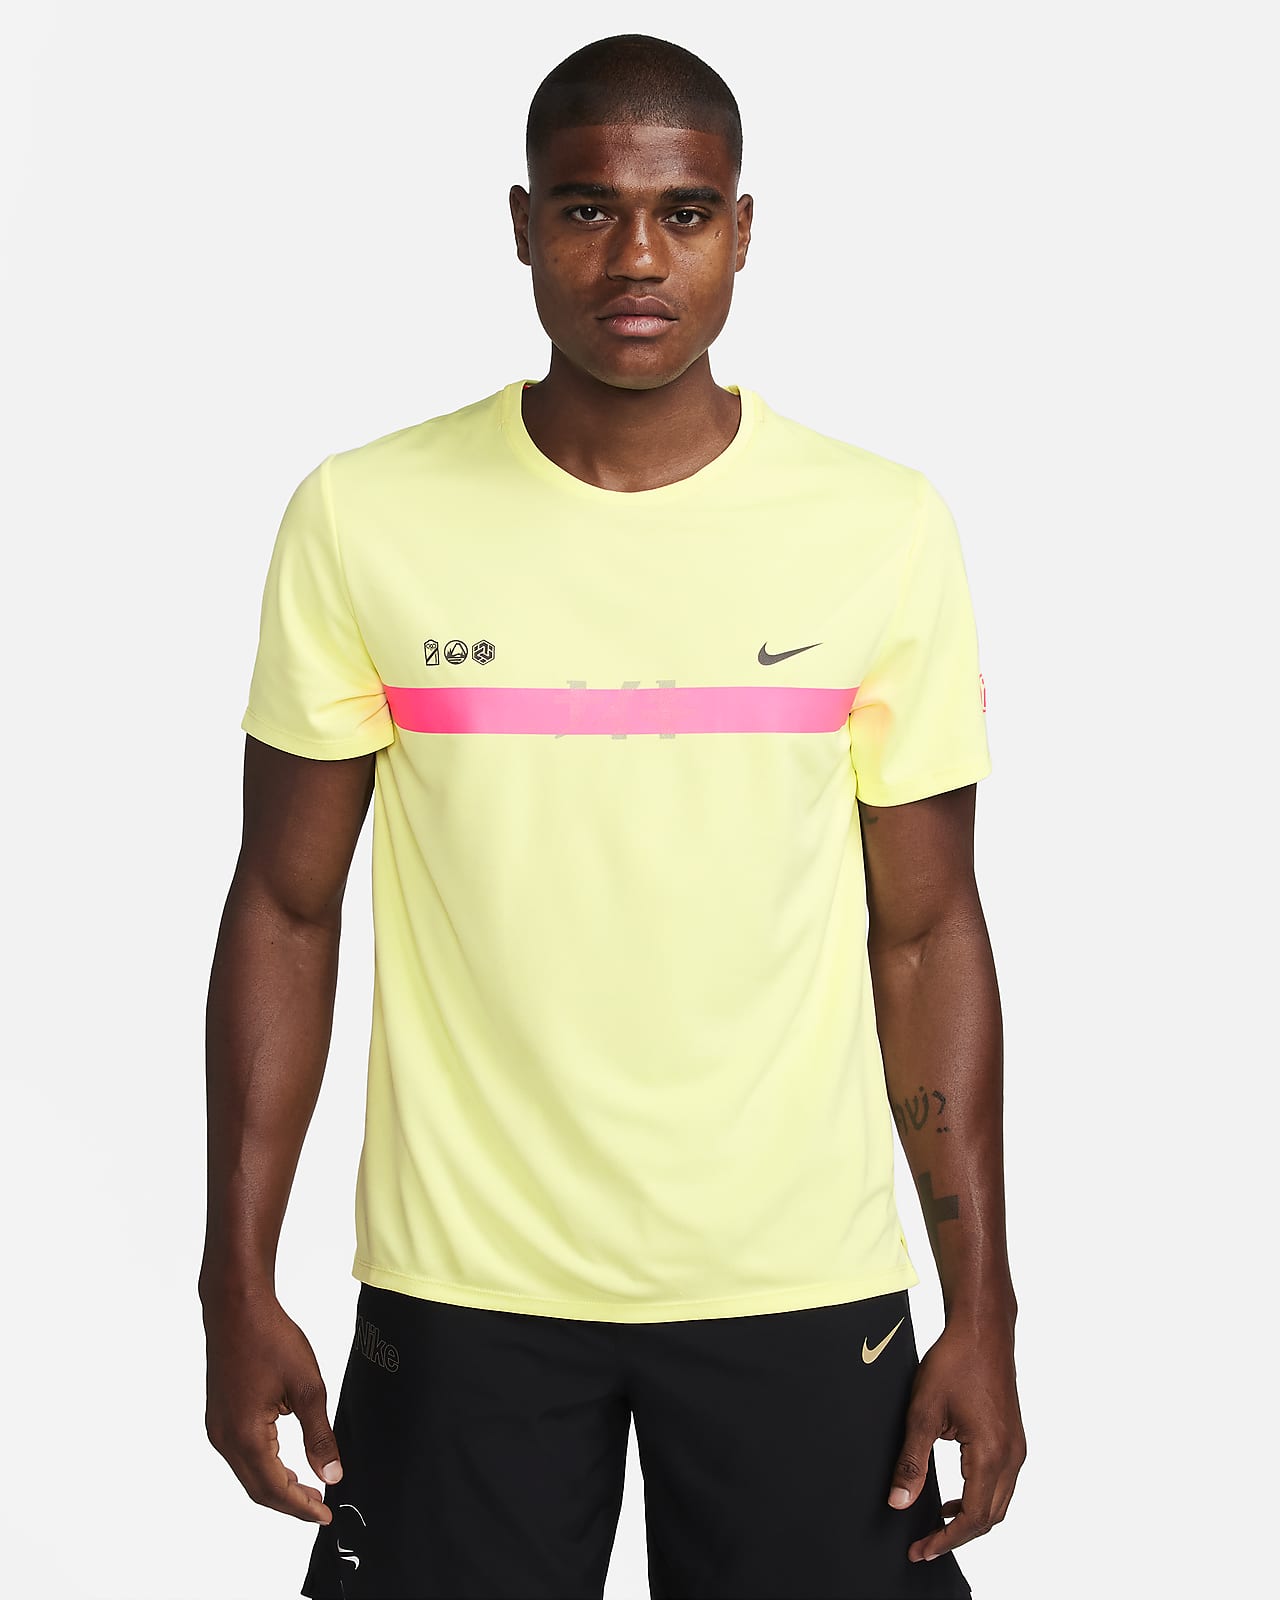 Men's Running Clothes. Nike CA